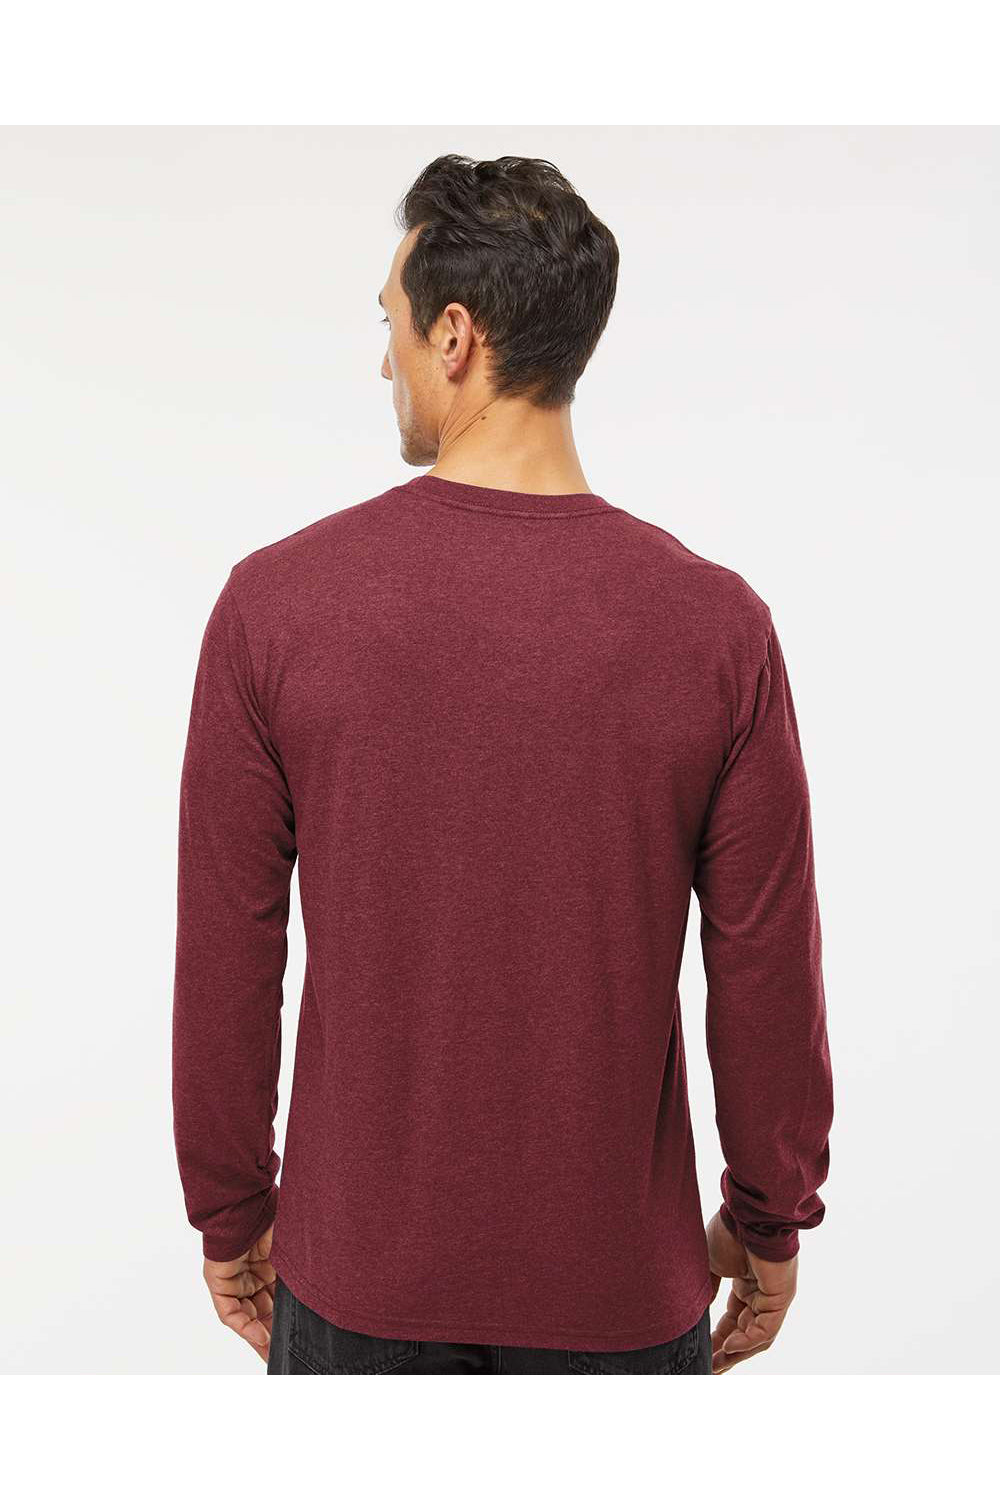 Kastlfel 2016 Mens RecycledSoft Long Sleeve Crewneck T-Shirt Burgundy Model Back